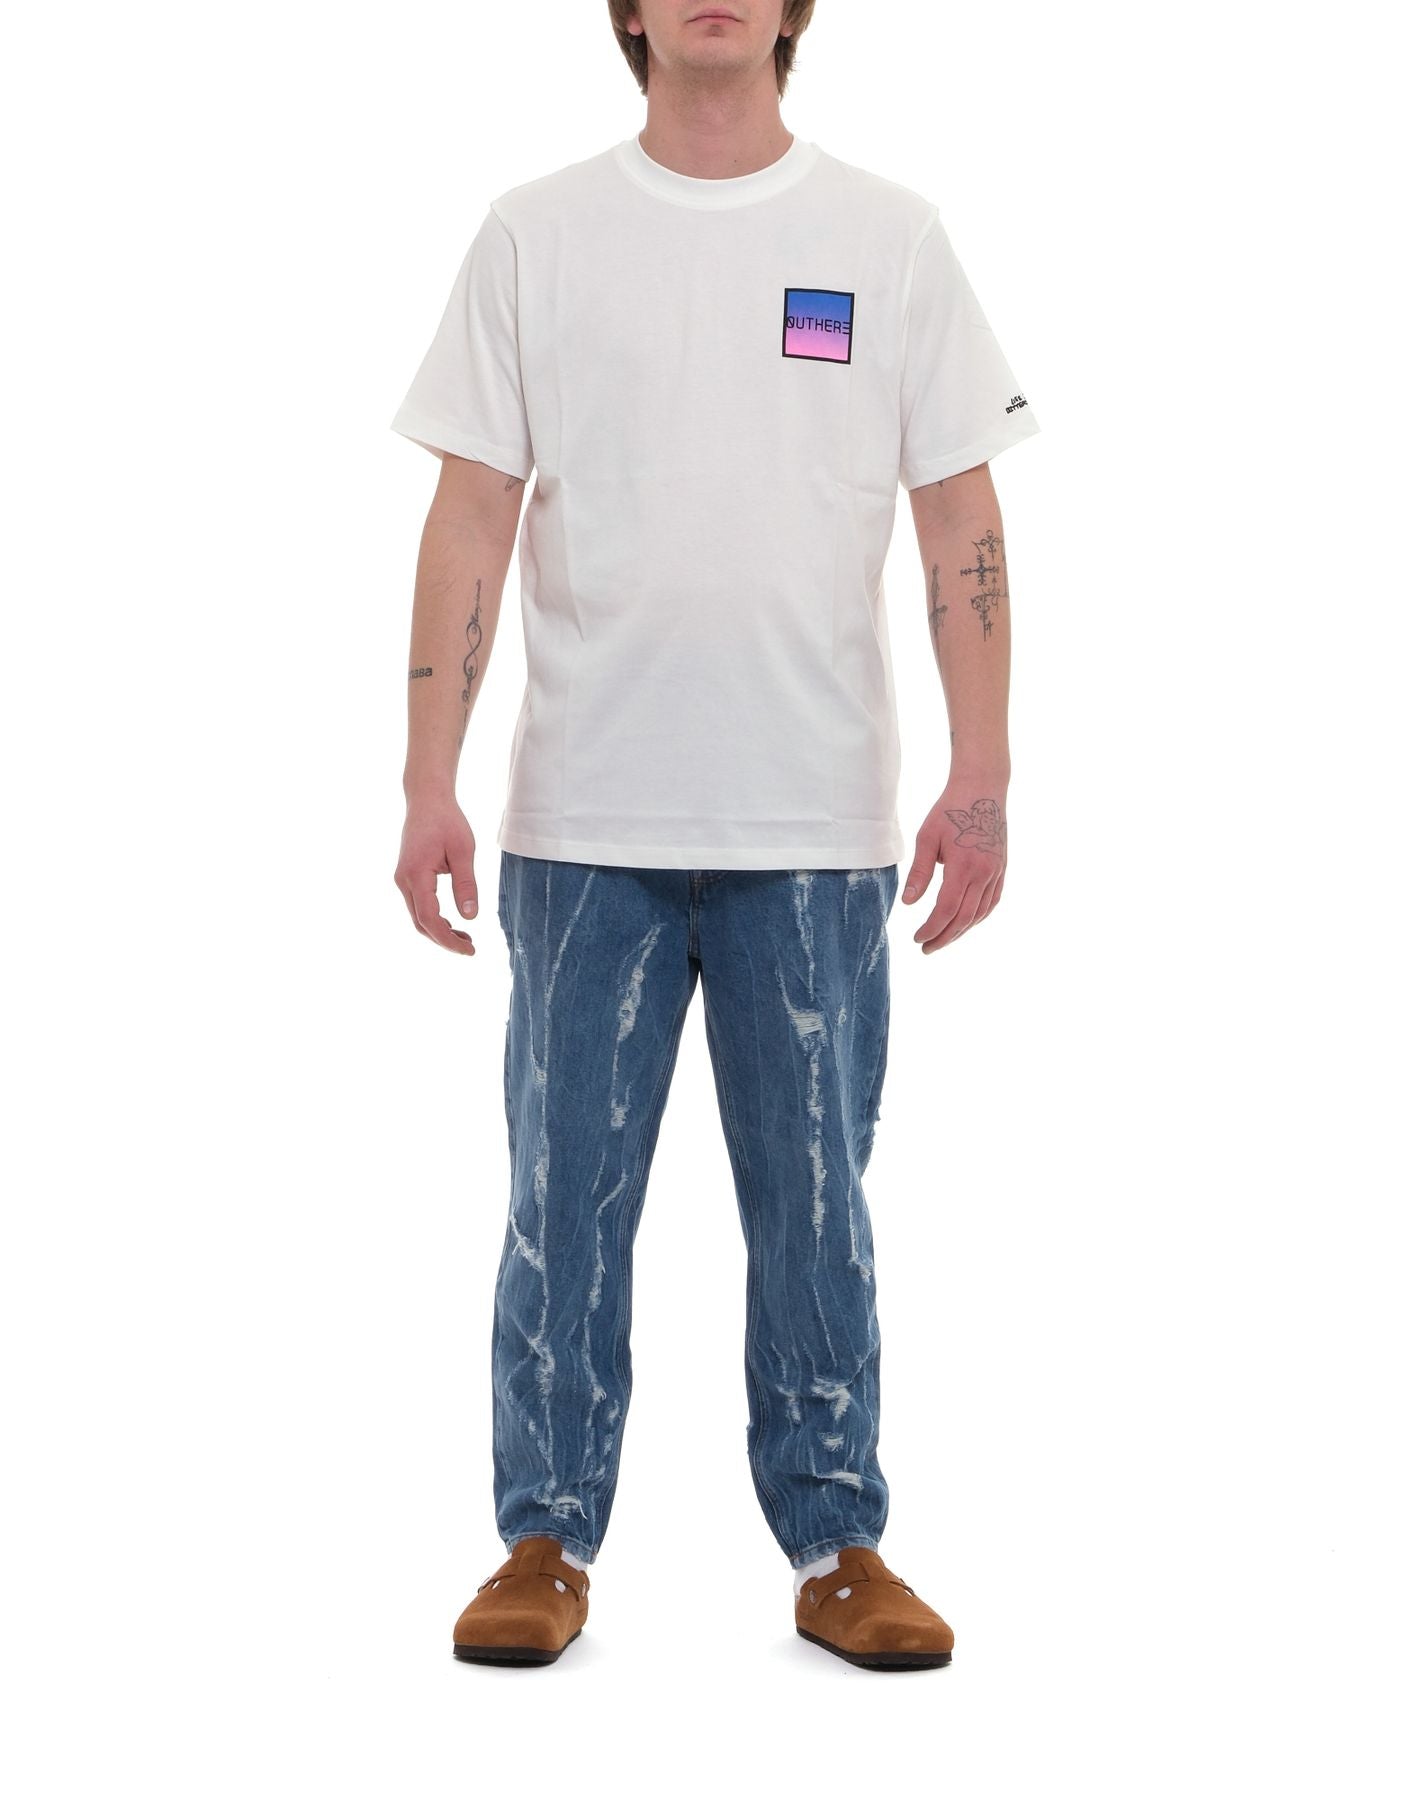 Camiseta hombre eotm146ag95 blanco outhere